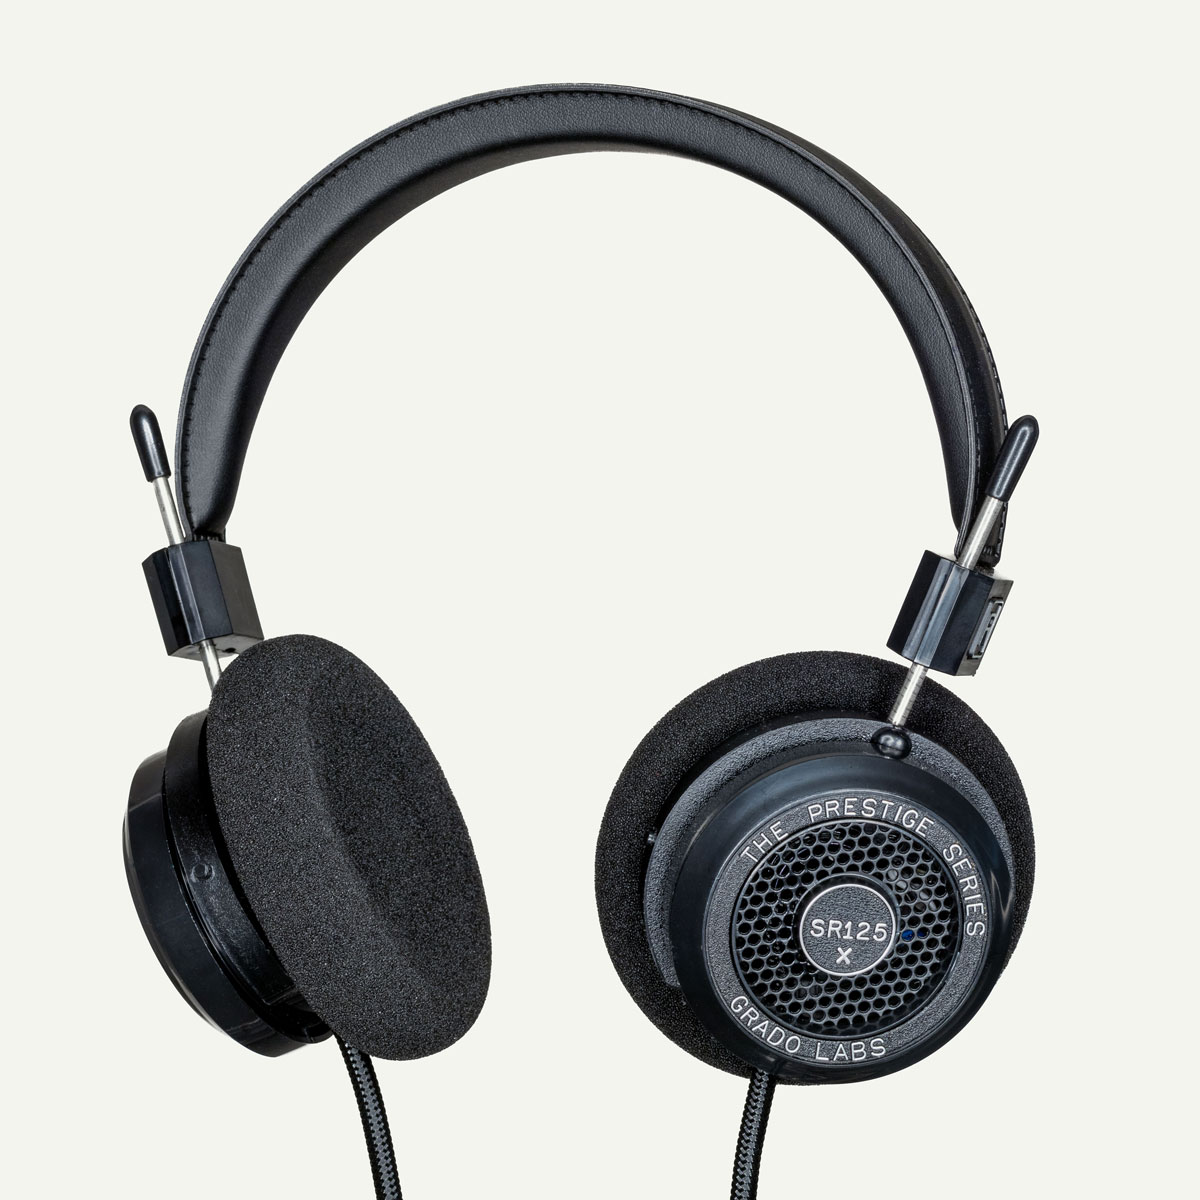 Photo of 3/4 view of SR125x Headphones